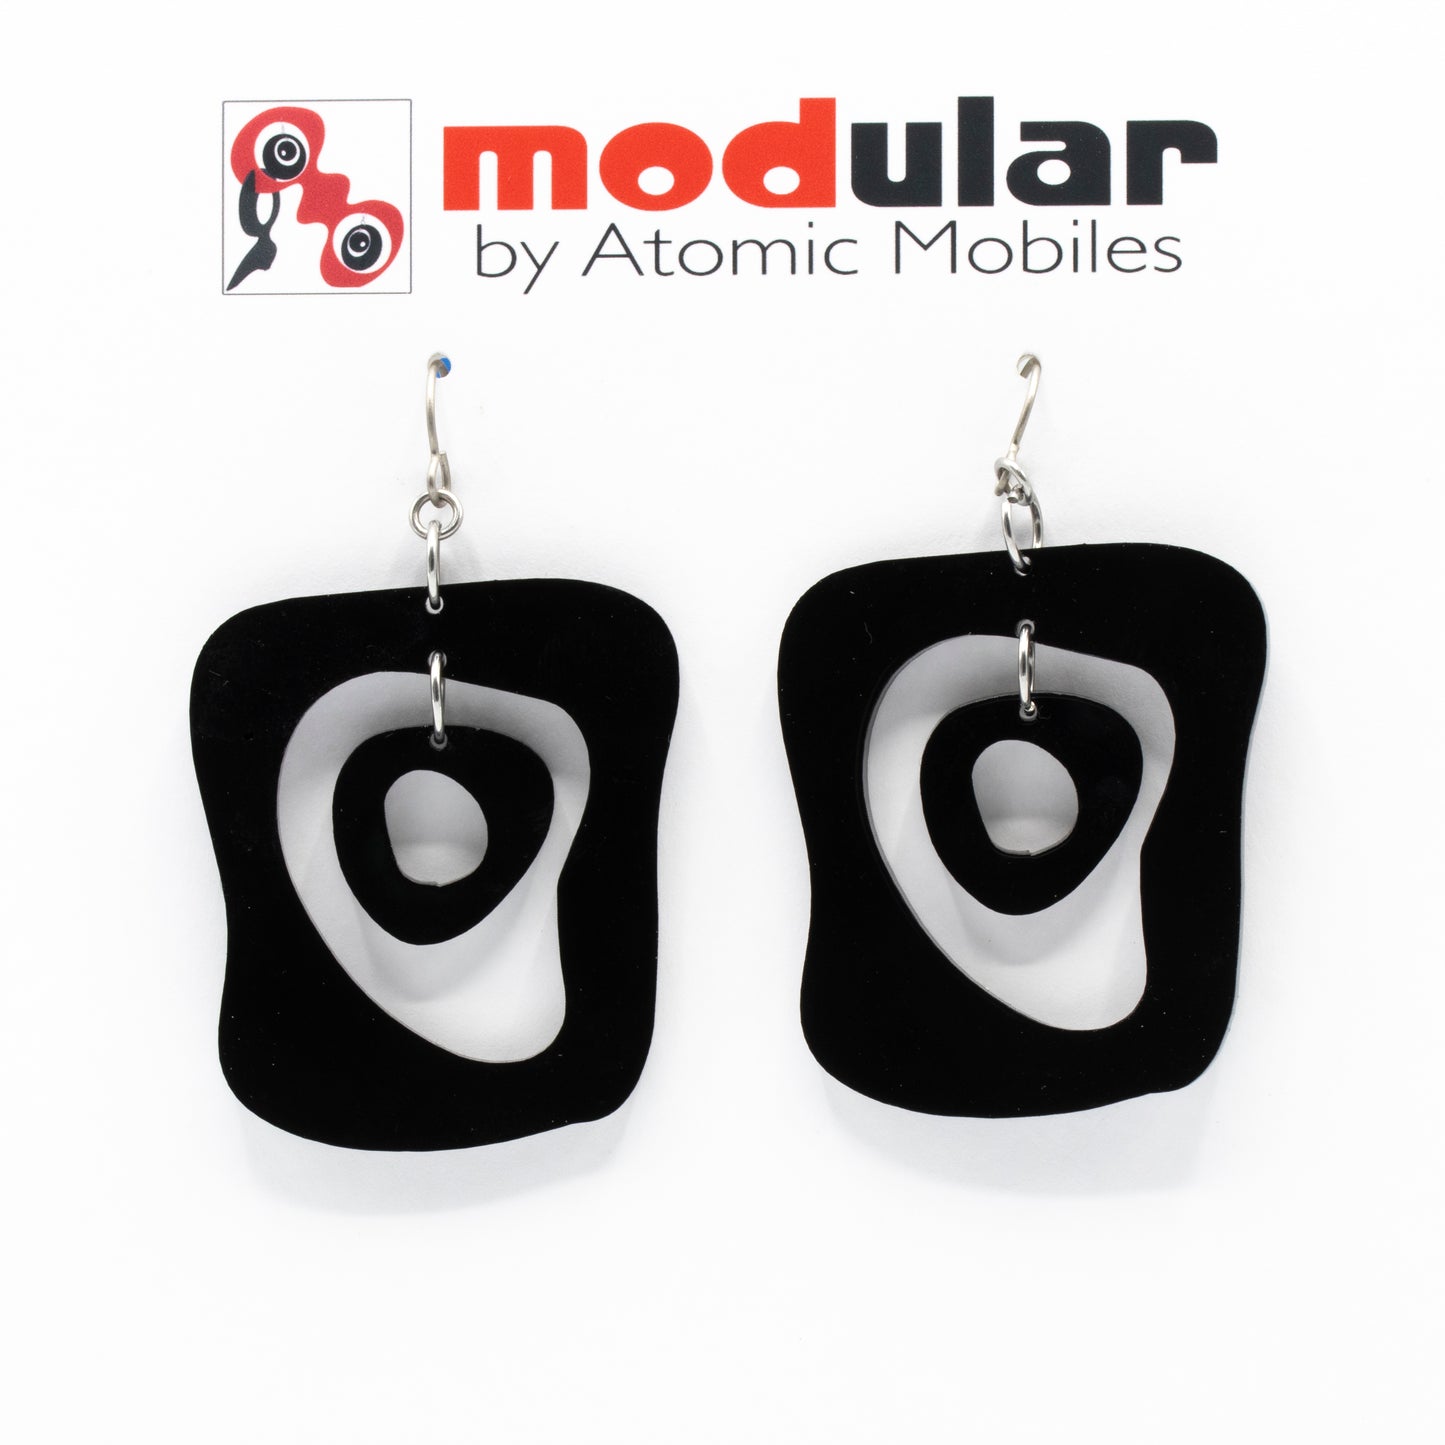 MODular Earrings - Mid Mod Statement Earrings in Black by AtomicMobiles.com - mid century inspired modern art dangle earrings